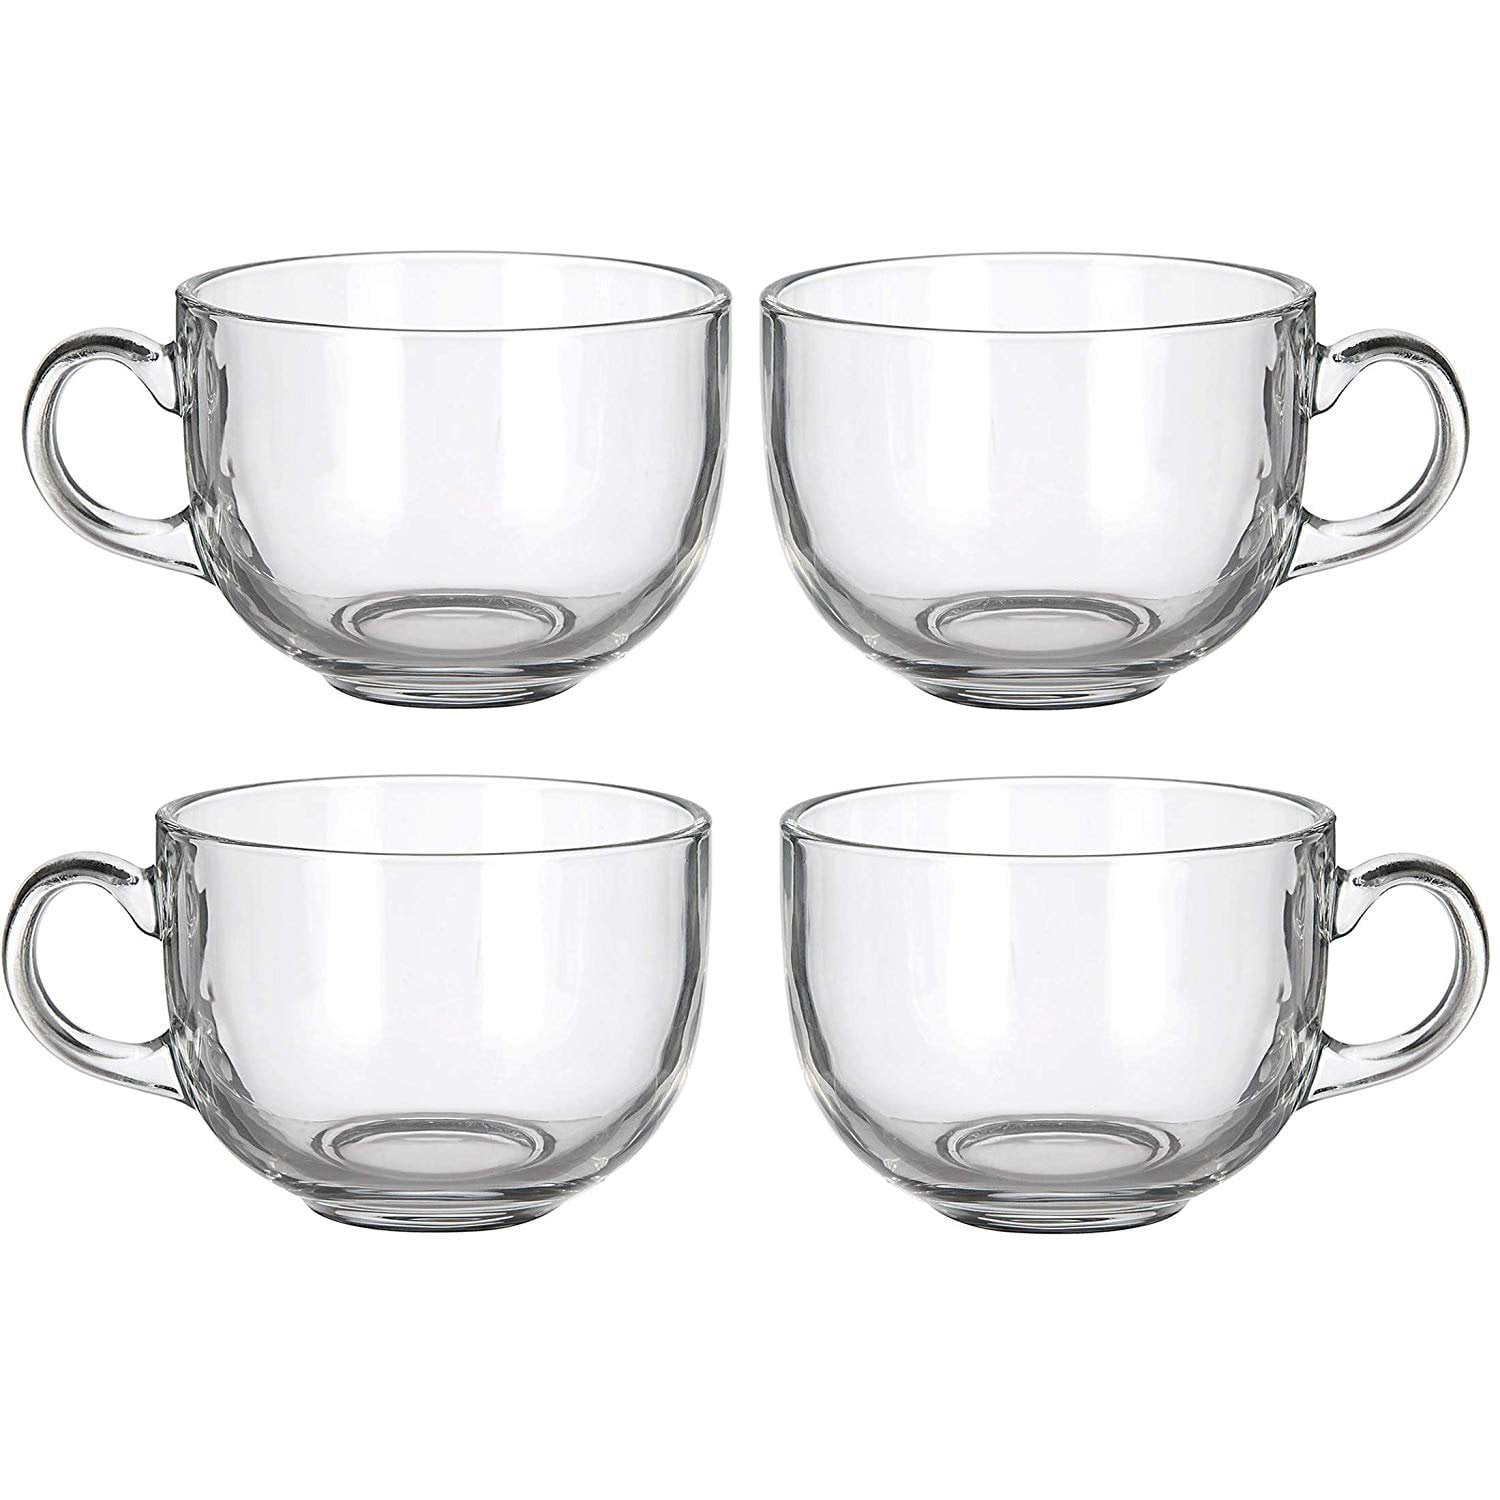 Set of Coffee Tea Cups latte mug large Clear Glass Mugs 18 oz 2